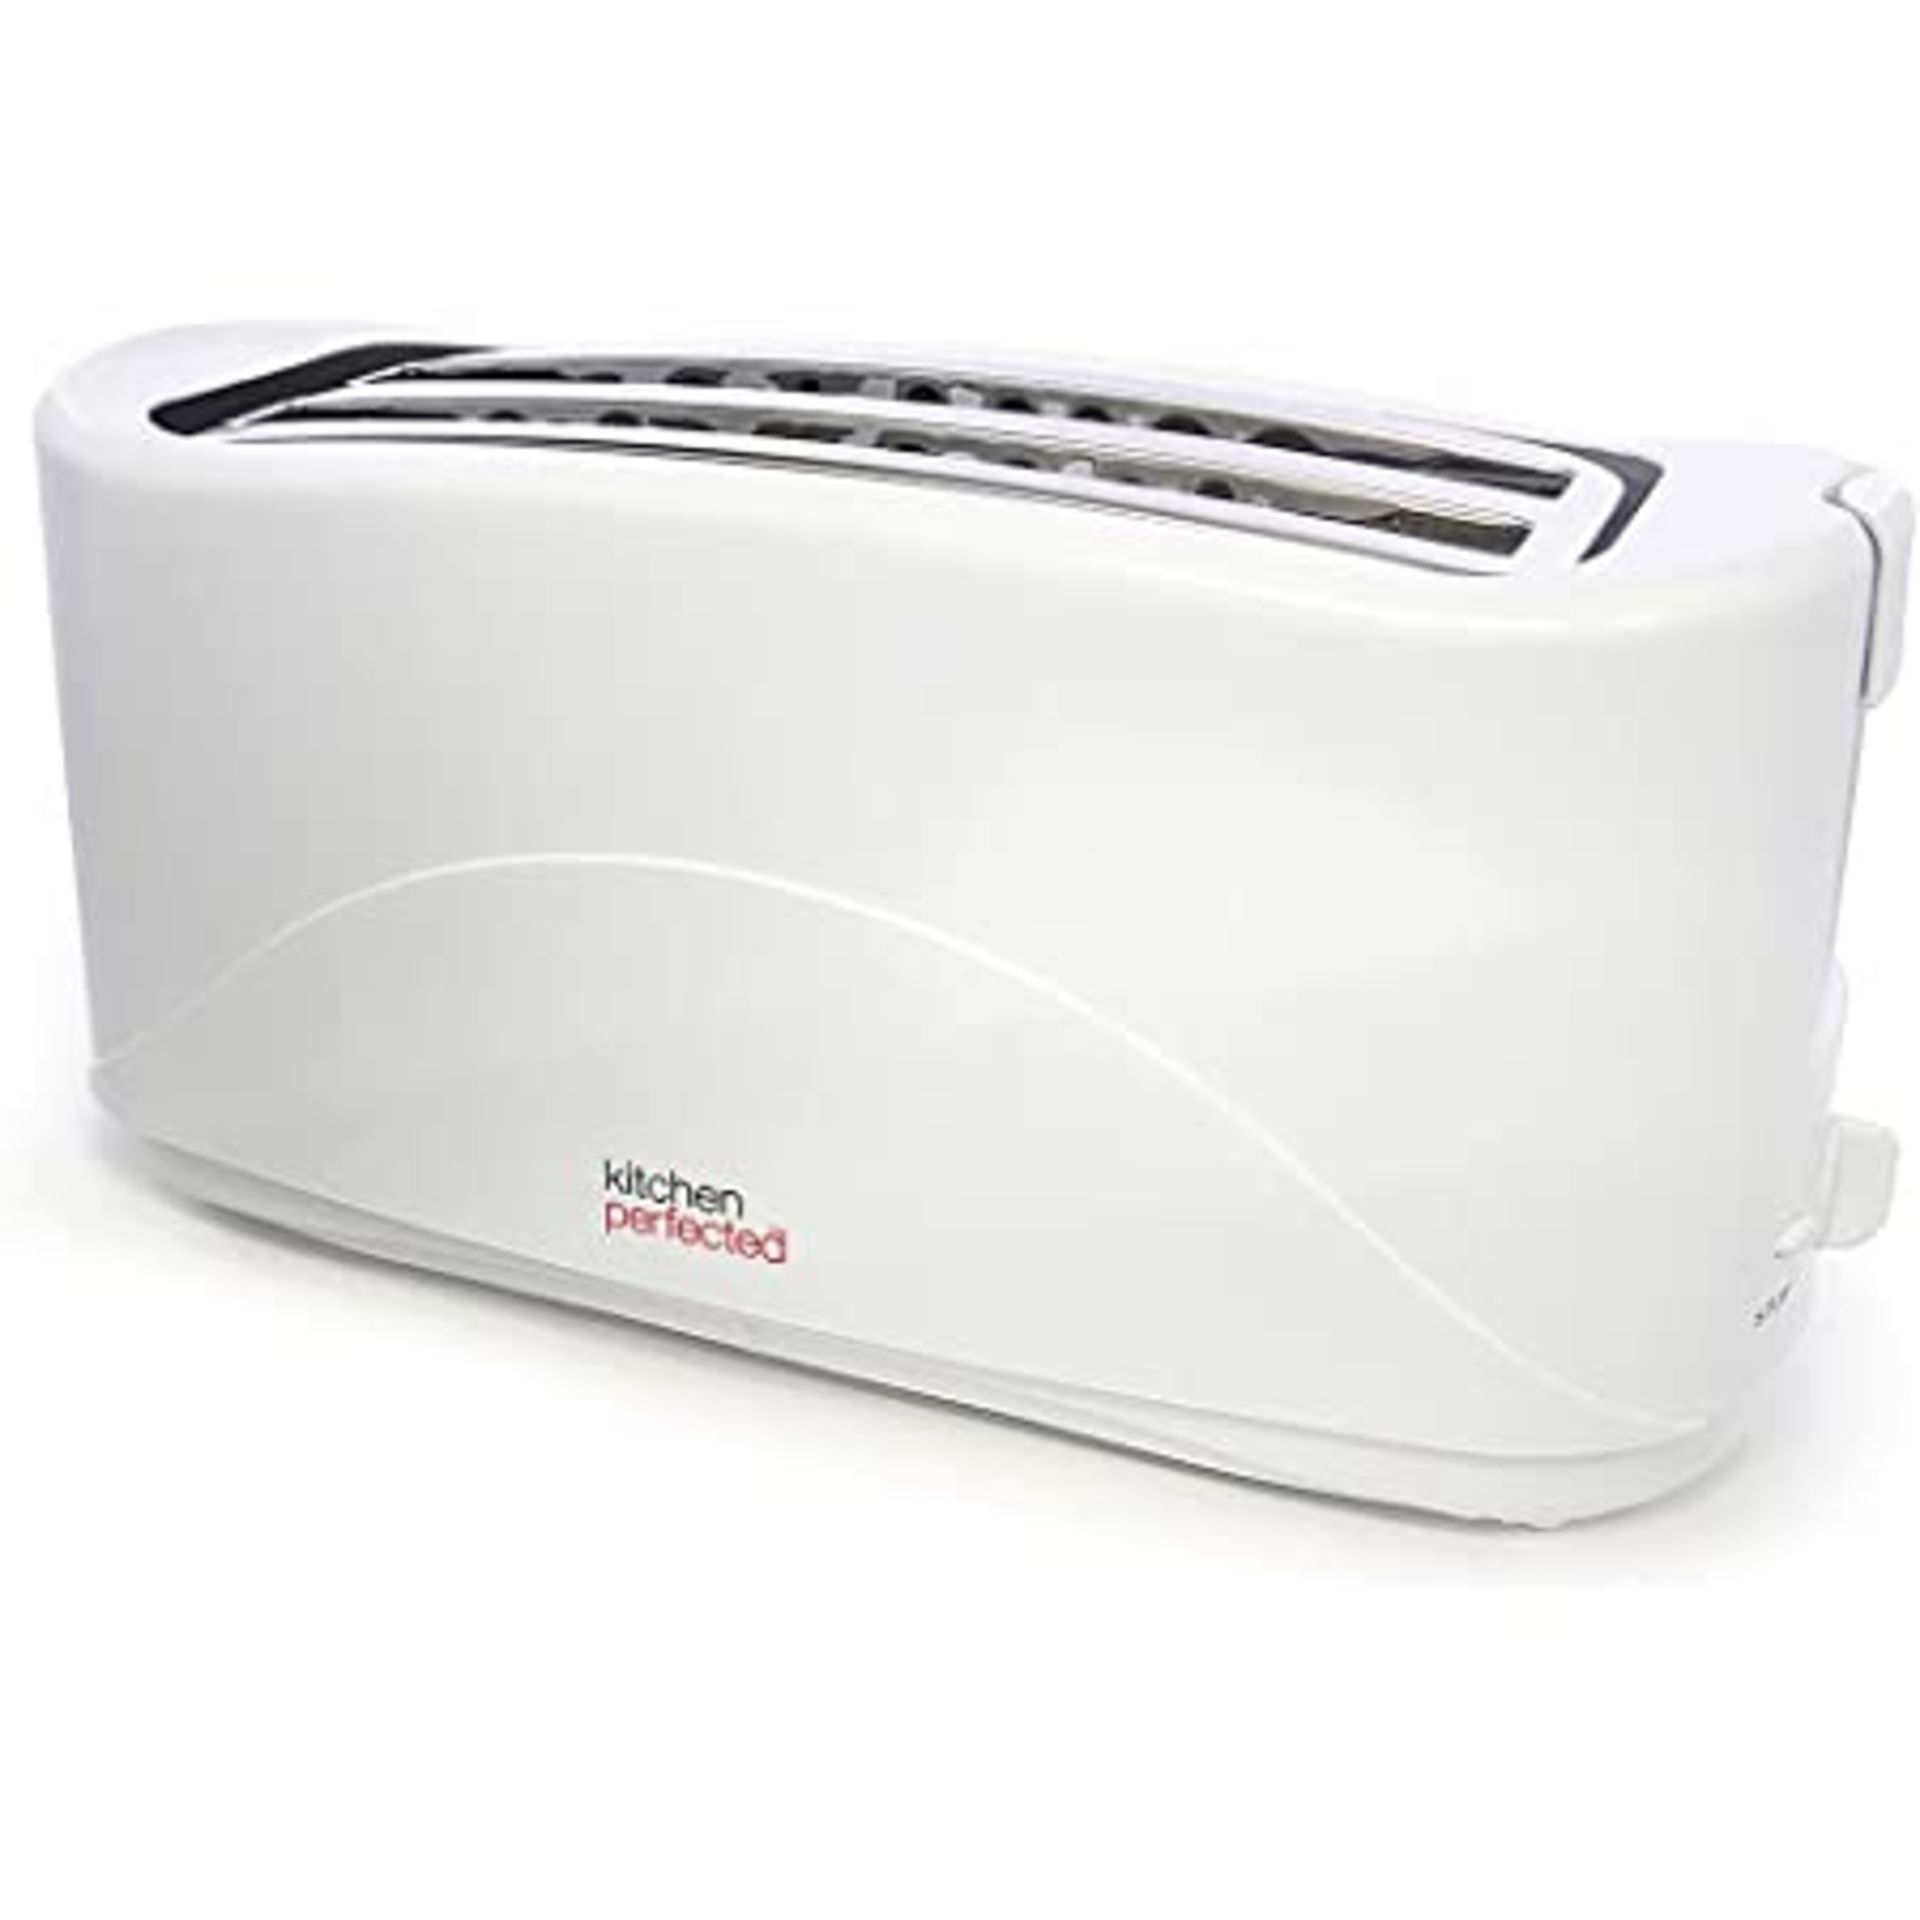 RRP-£22 KitchenPerfected 4 Slice Long Slot Toaster - White - E2112WH